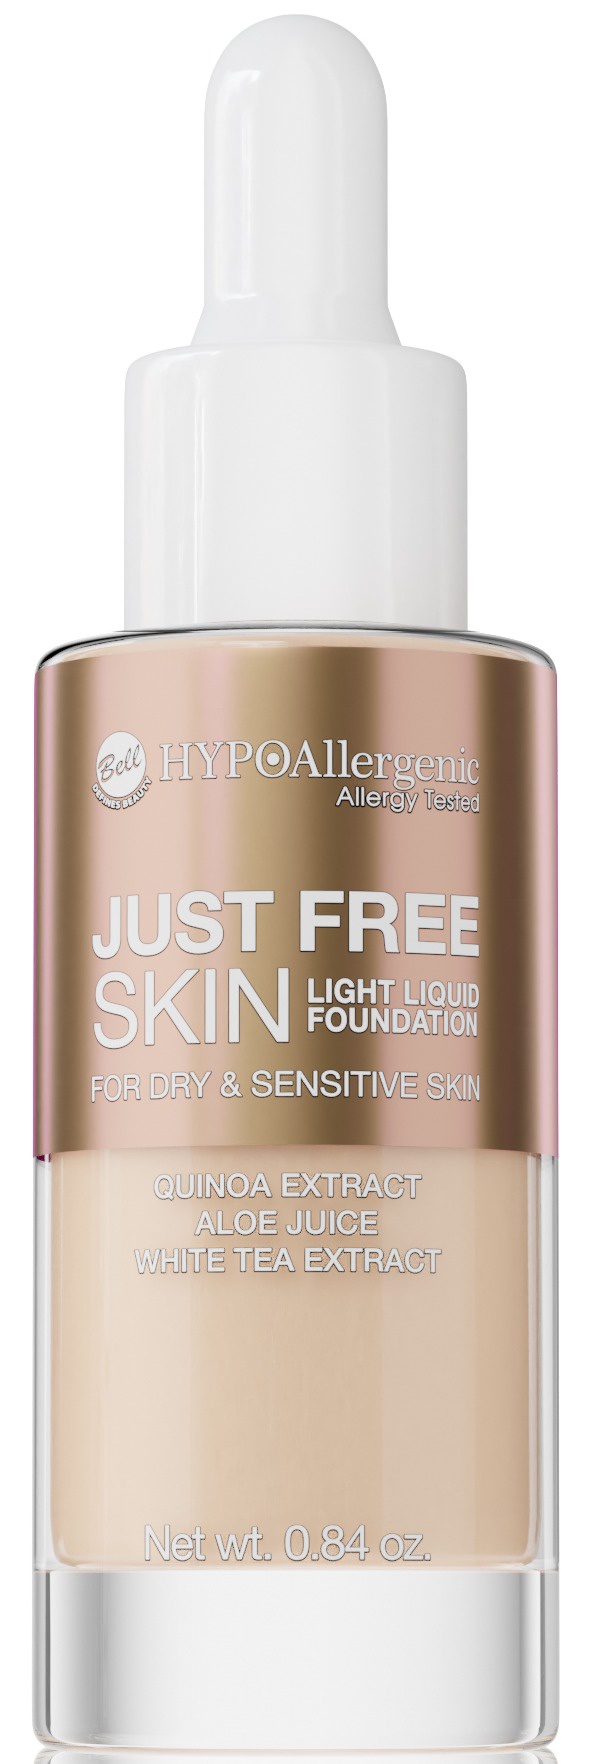 Bell HYPOAllergenic Just Free Skin Light Liquid Foundation